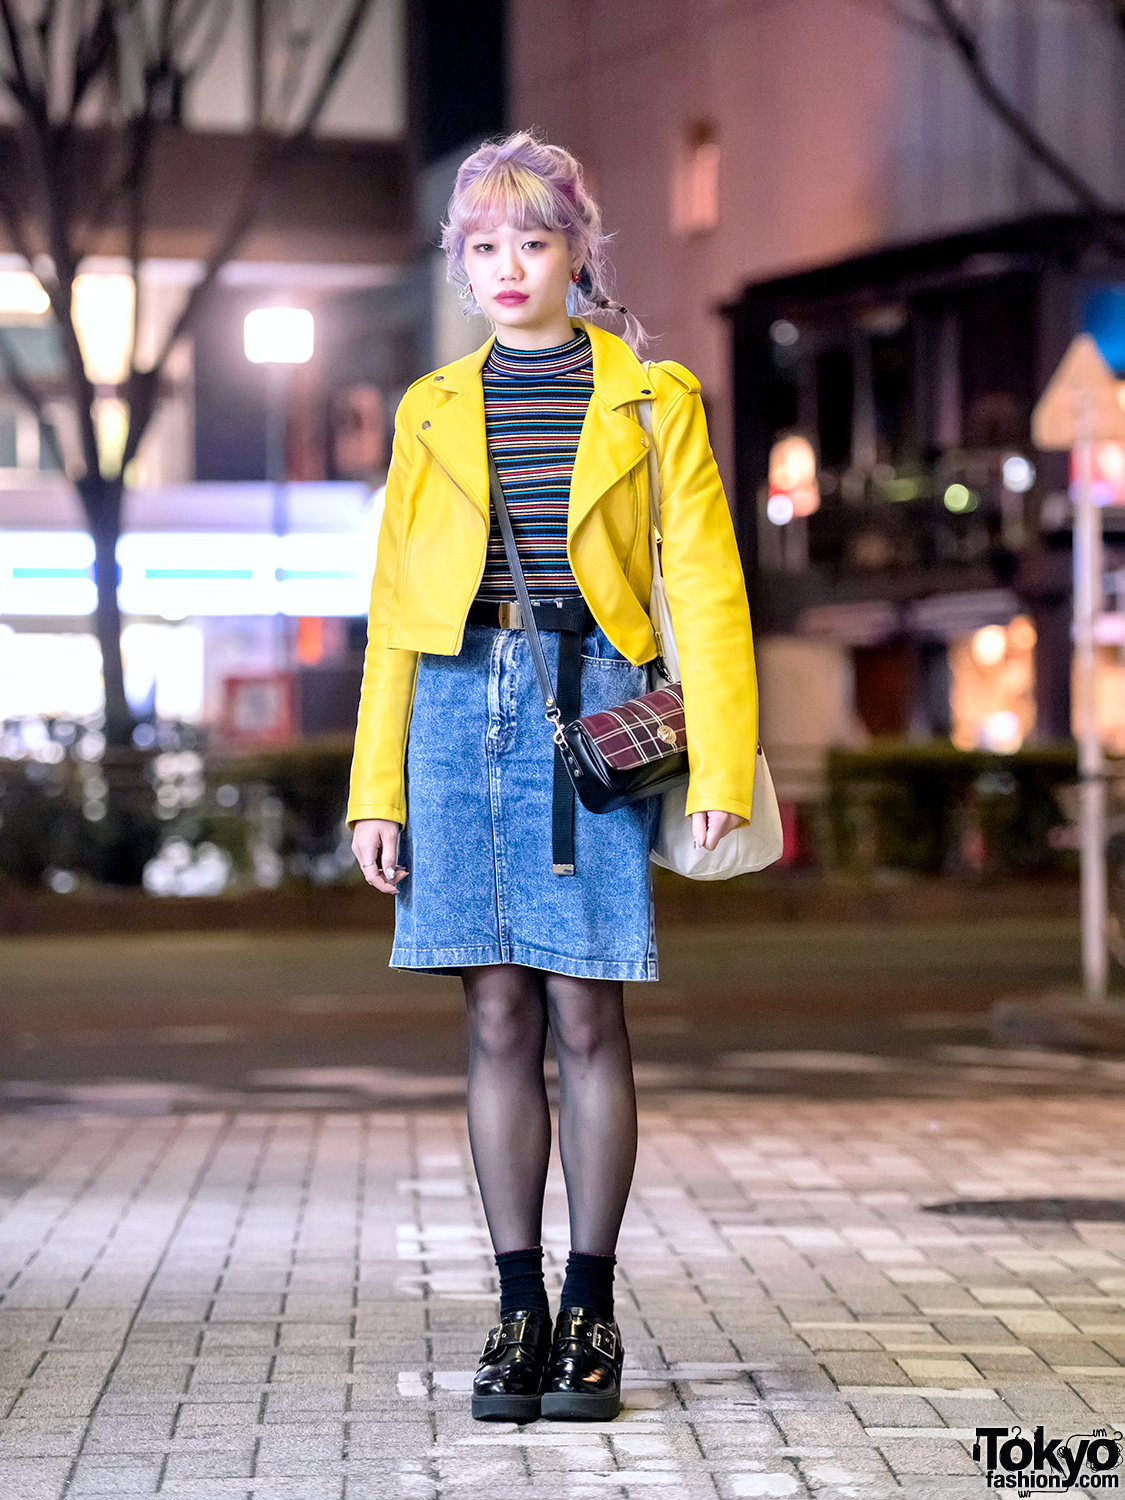 Harajuku Girl w/ Pastel Rainbow Braids Hair, Yellow Leather Jacket, Denim Skirt & Buckle Shoes